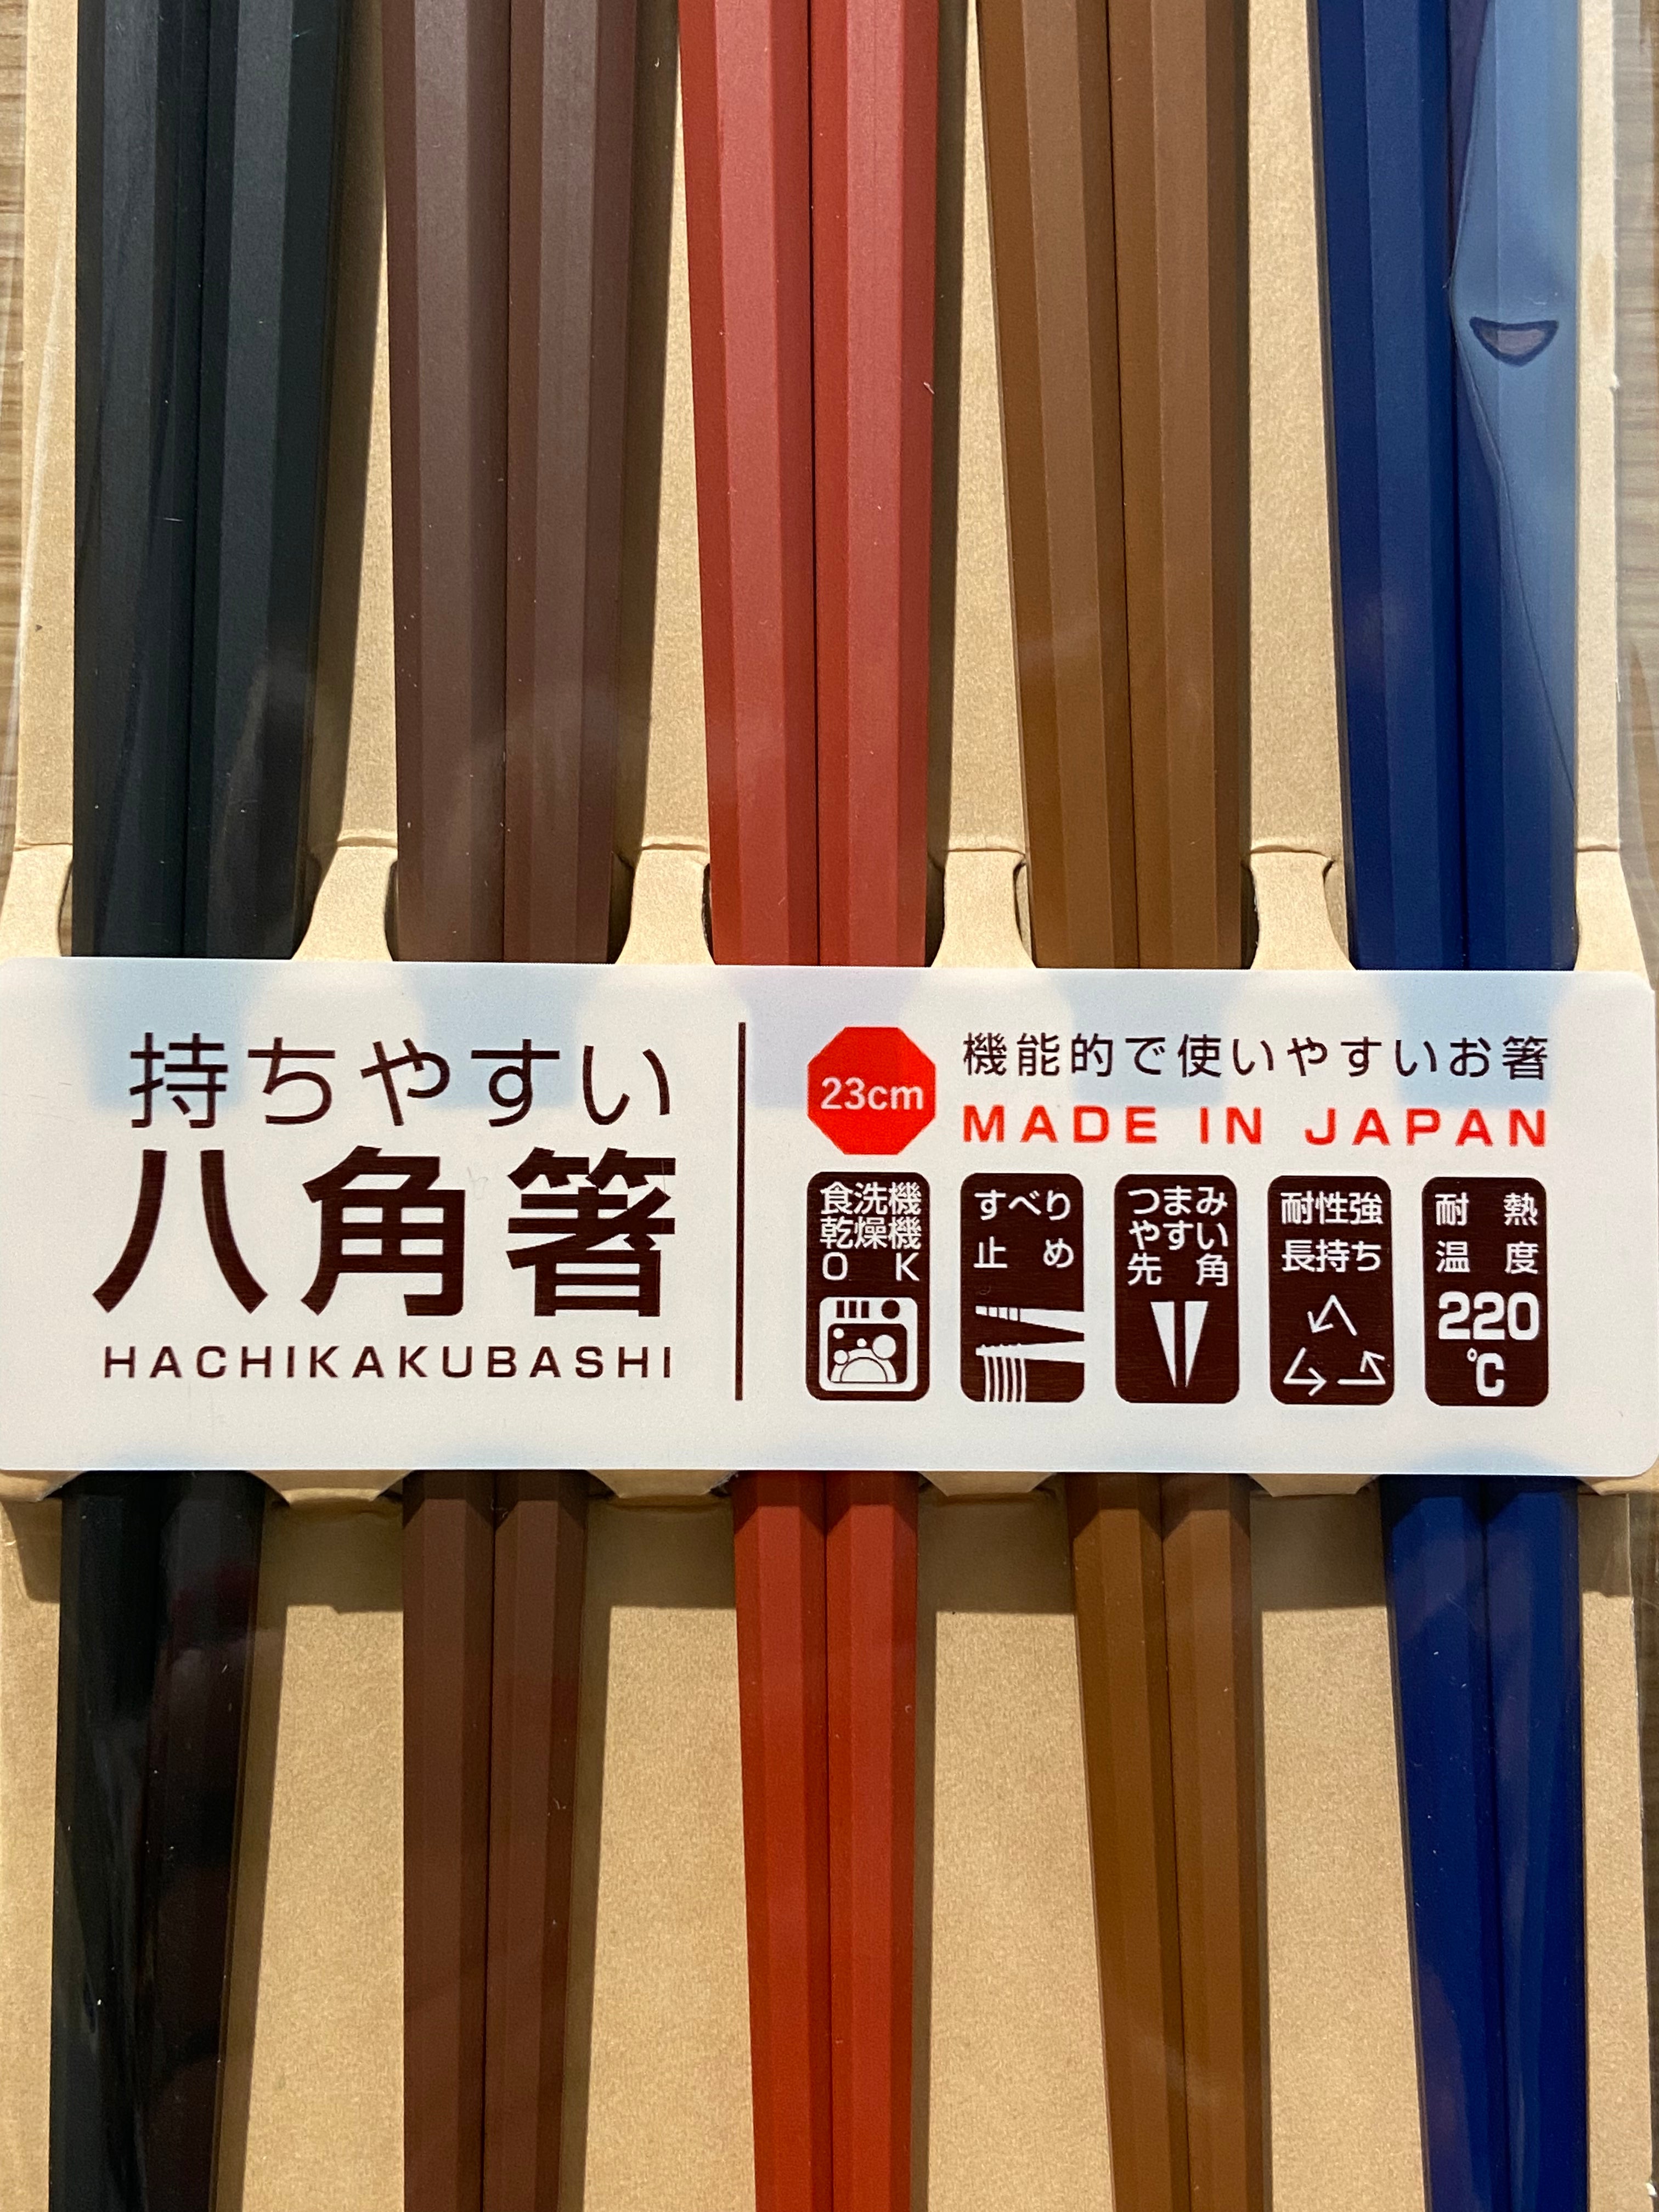 Chopsticks, dark colors